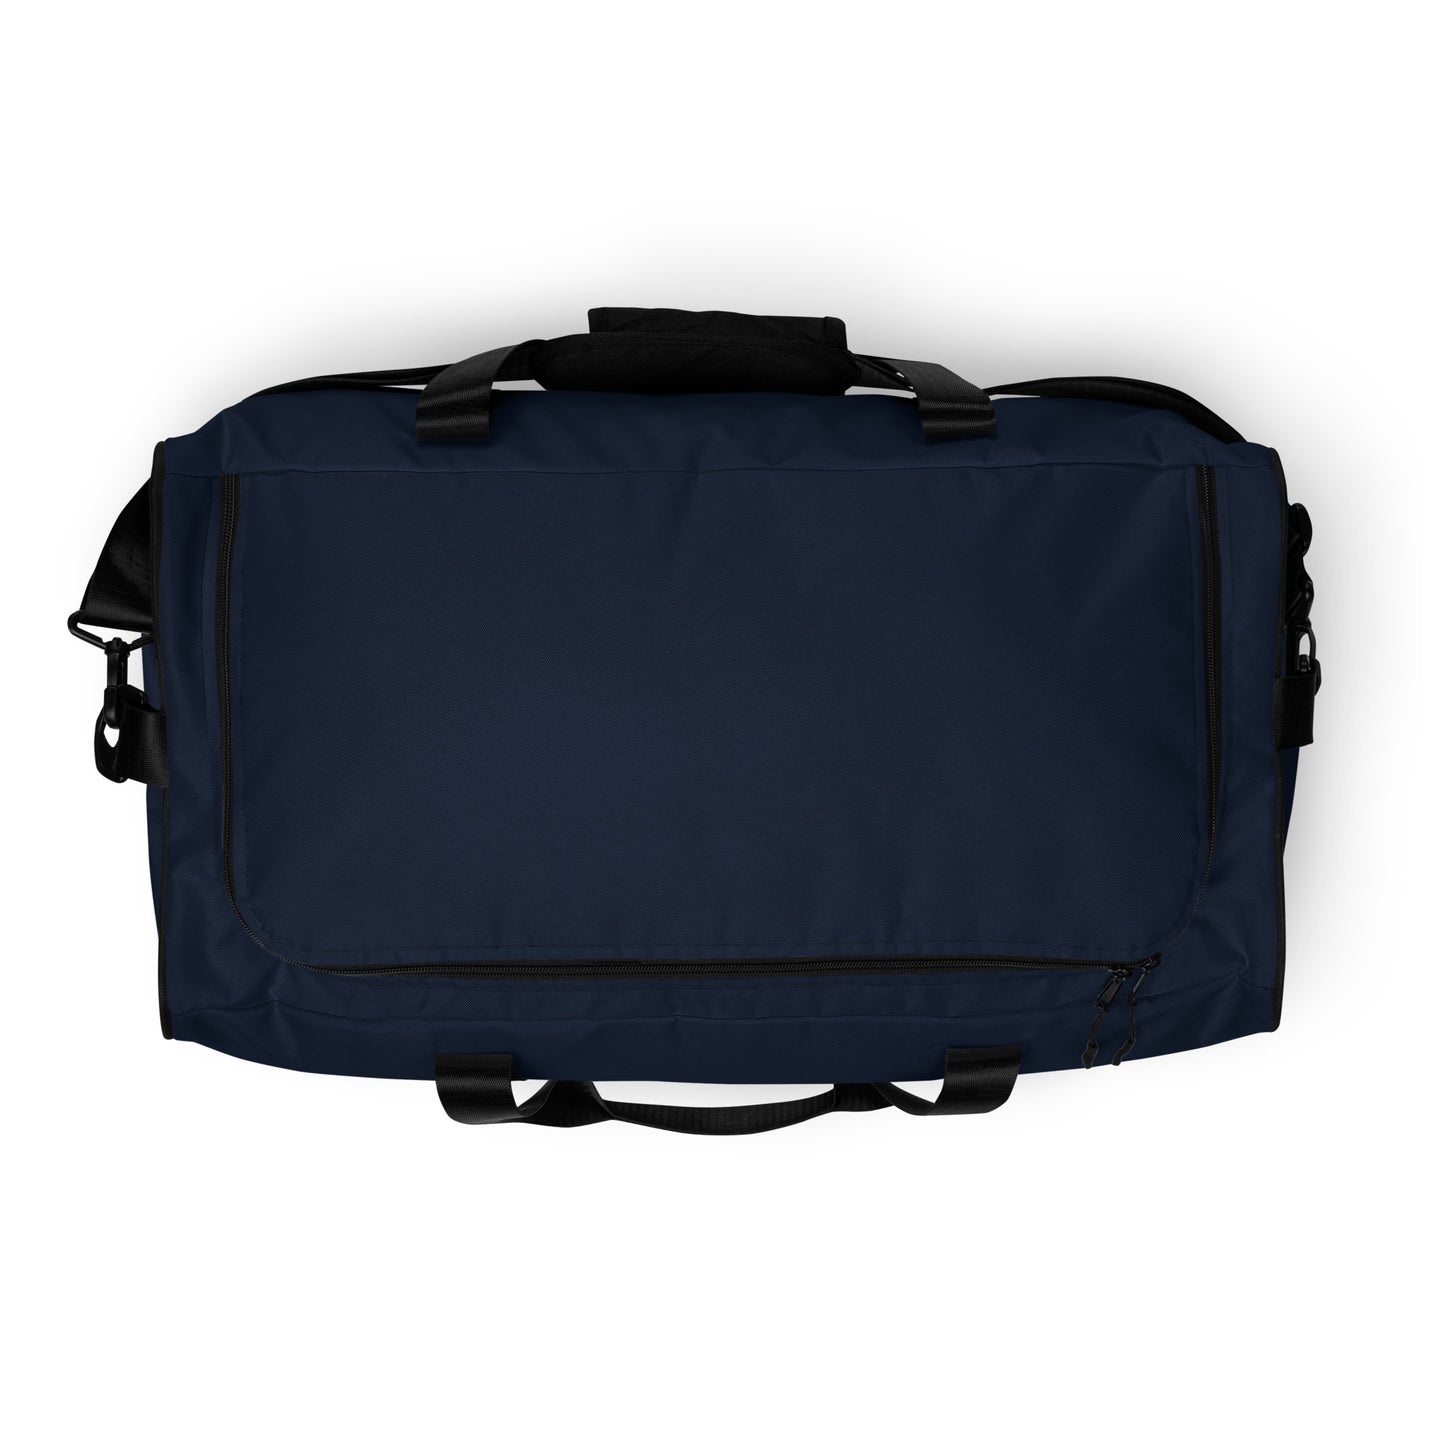 Duffle bag - Hyundai Williamsport